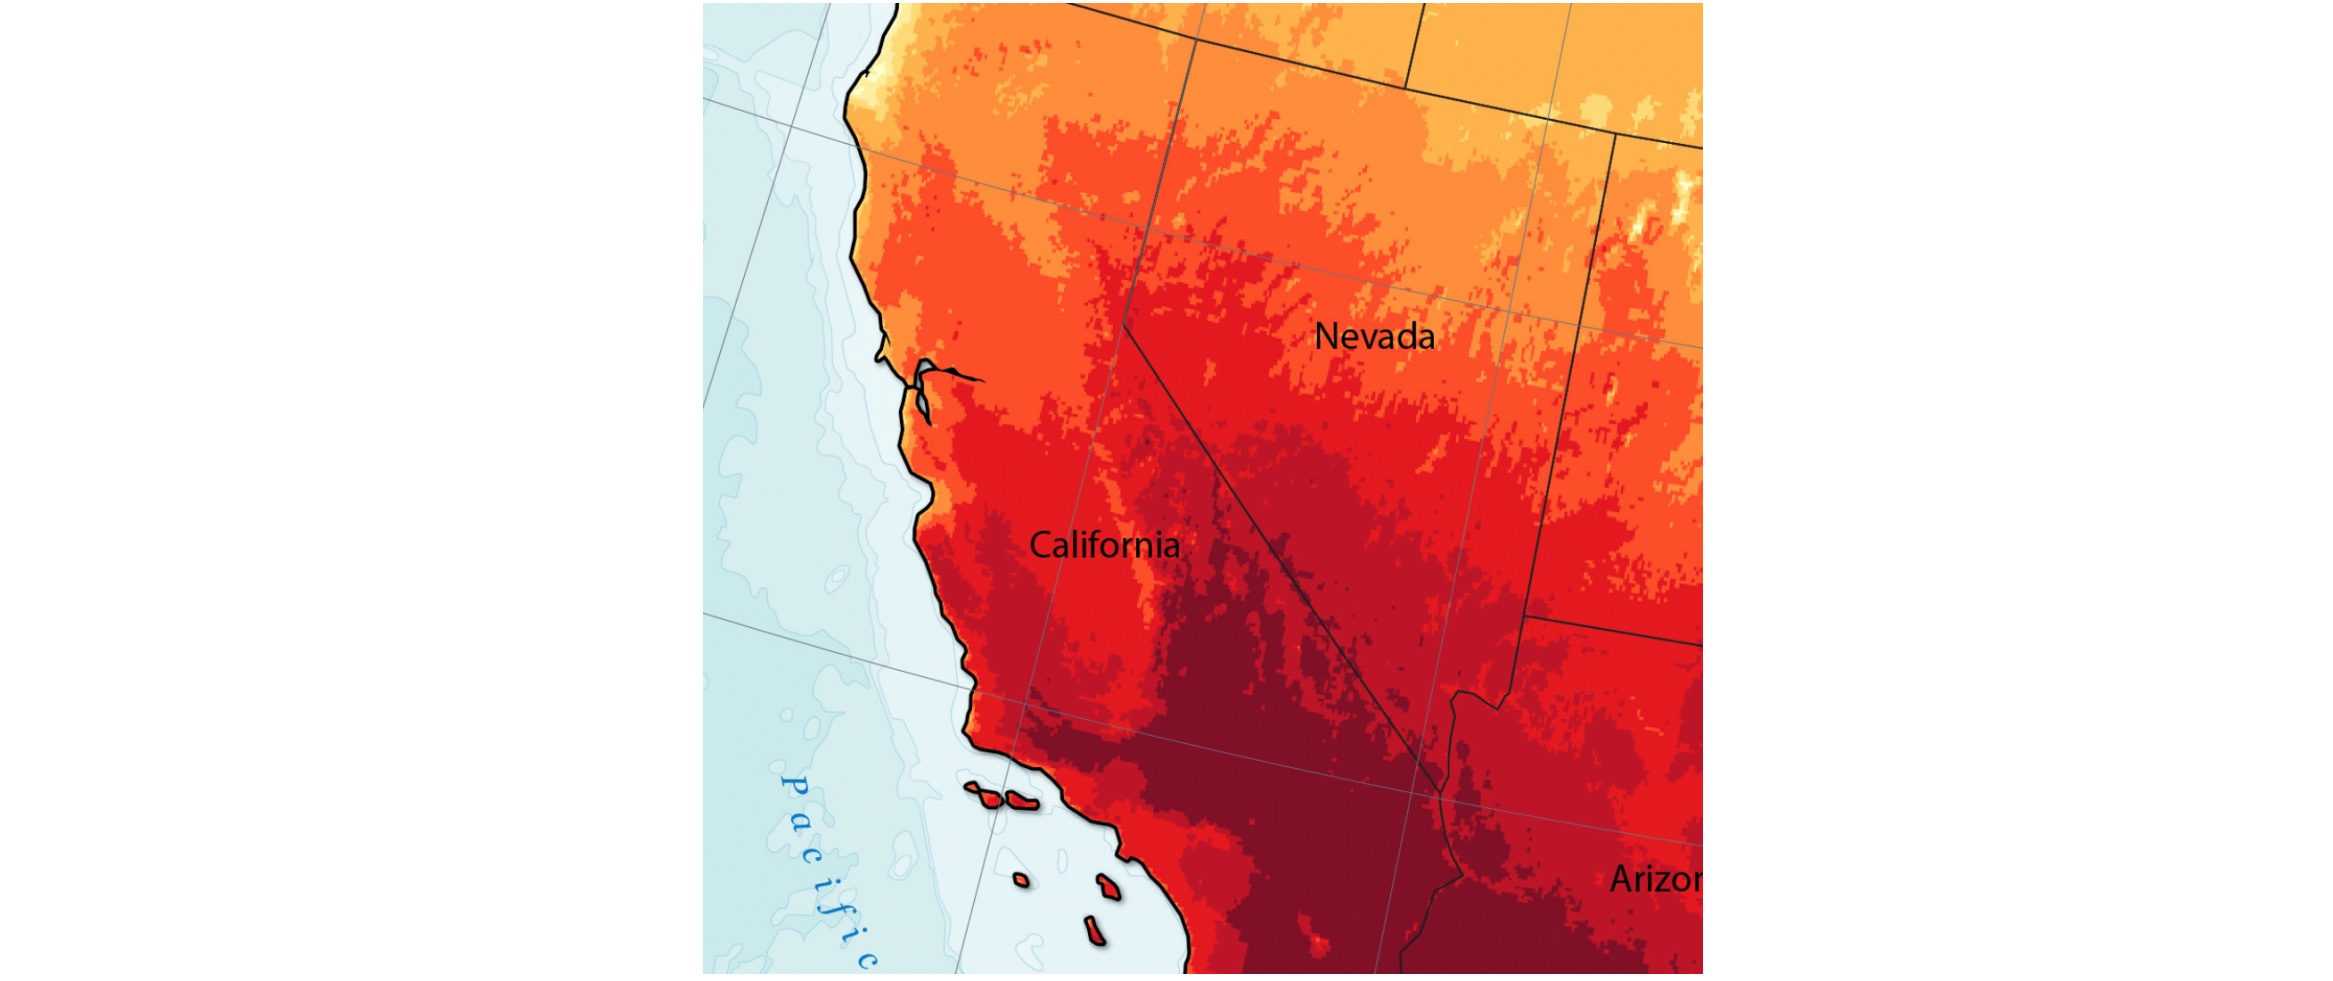 California's average annual solar resource